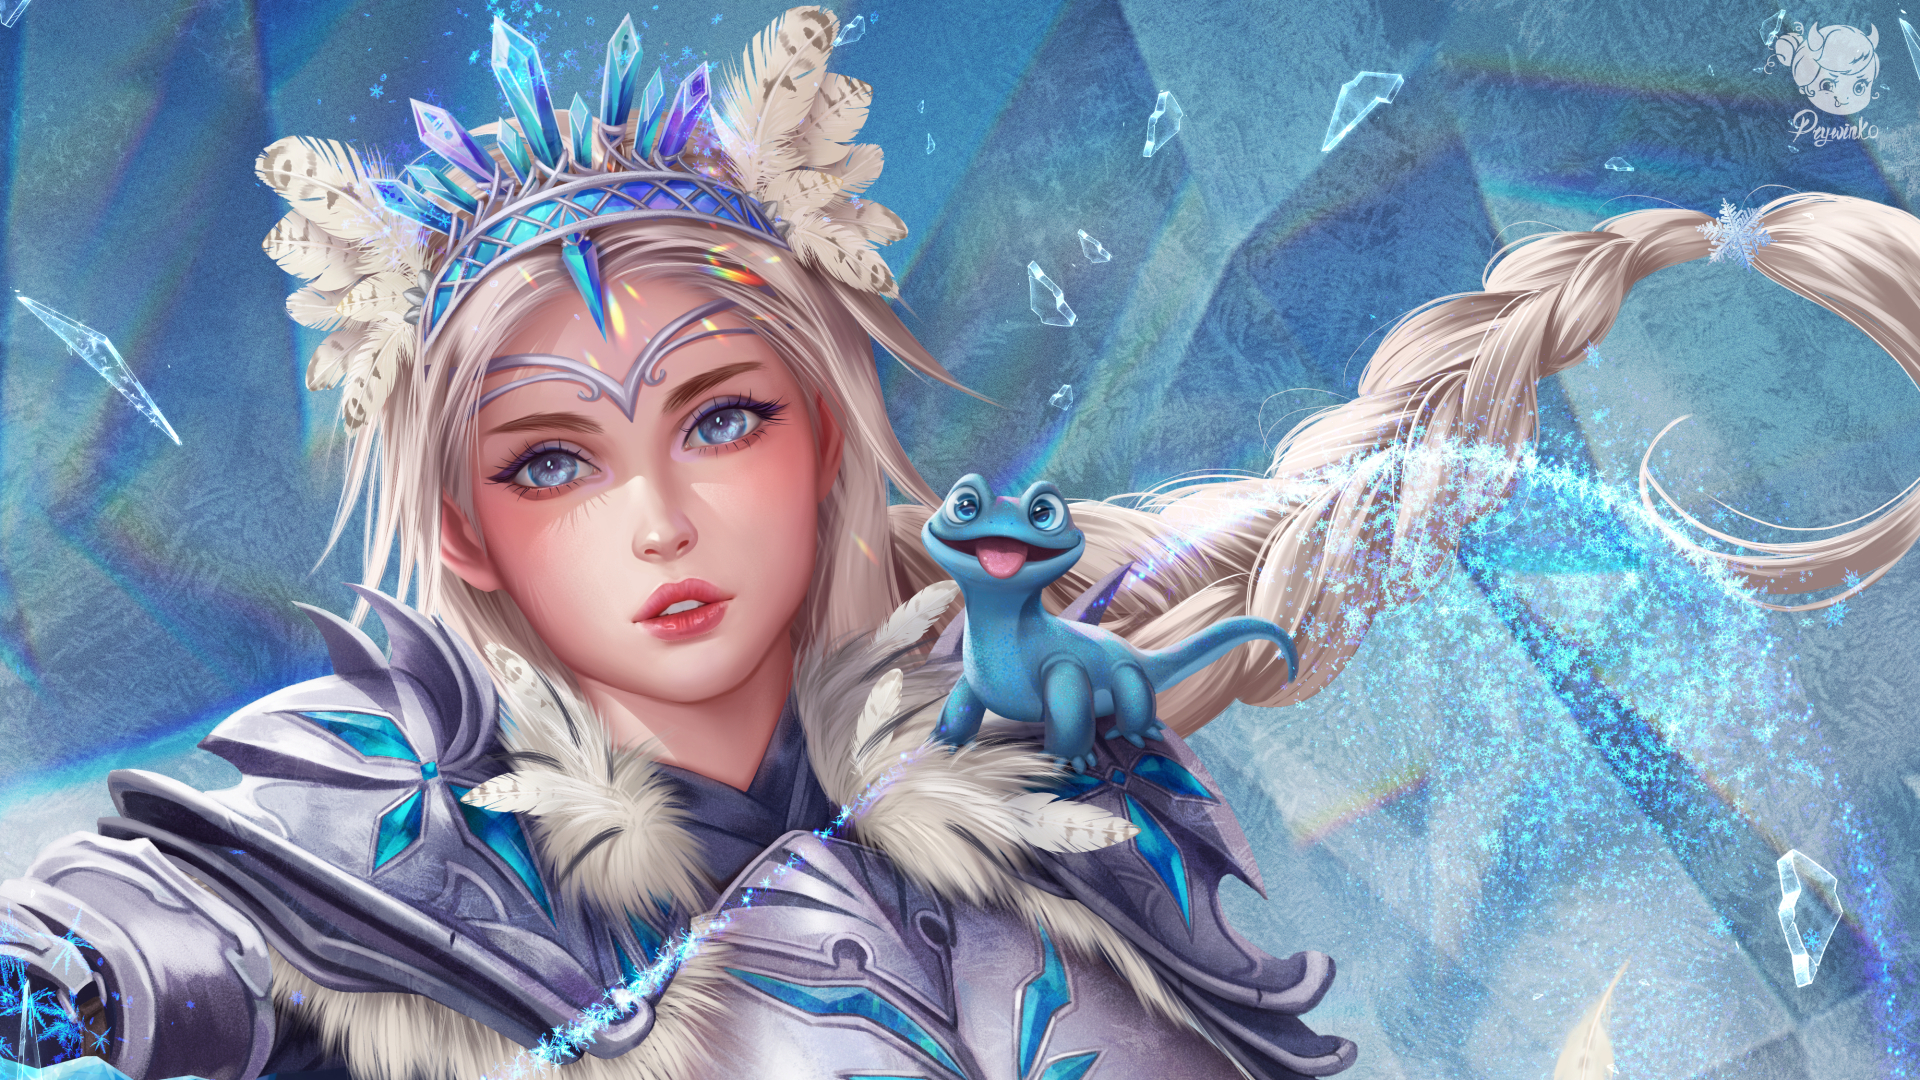 Prywinko Drawing Women Frozen Movie Elsa Braids Snow Flakes Blue Eyes Hair Accessories Crown Armor I 1920x1080